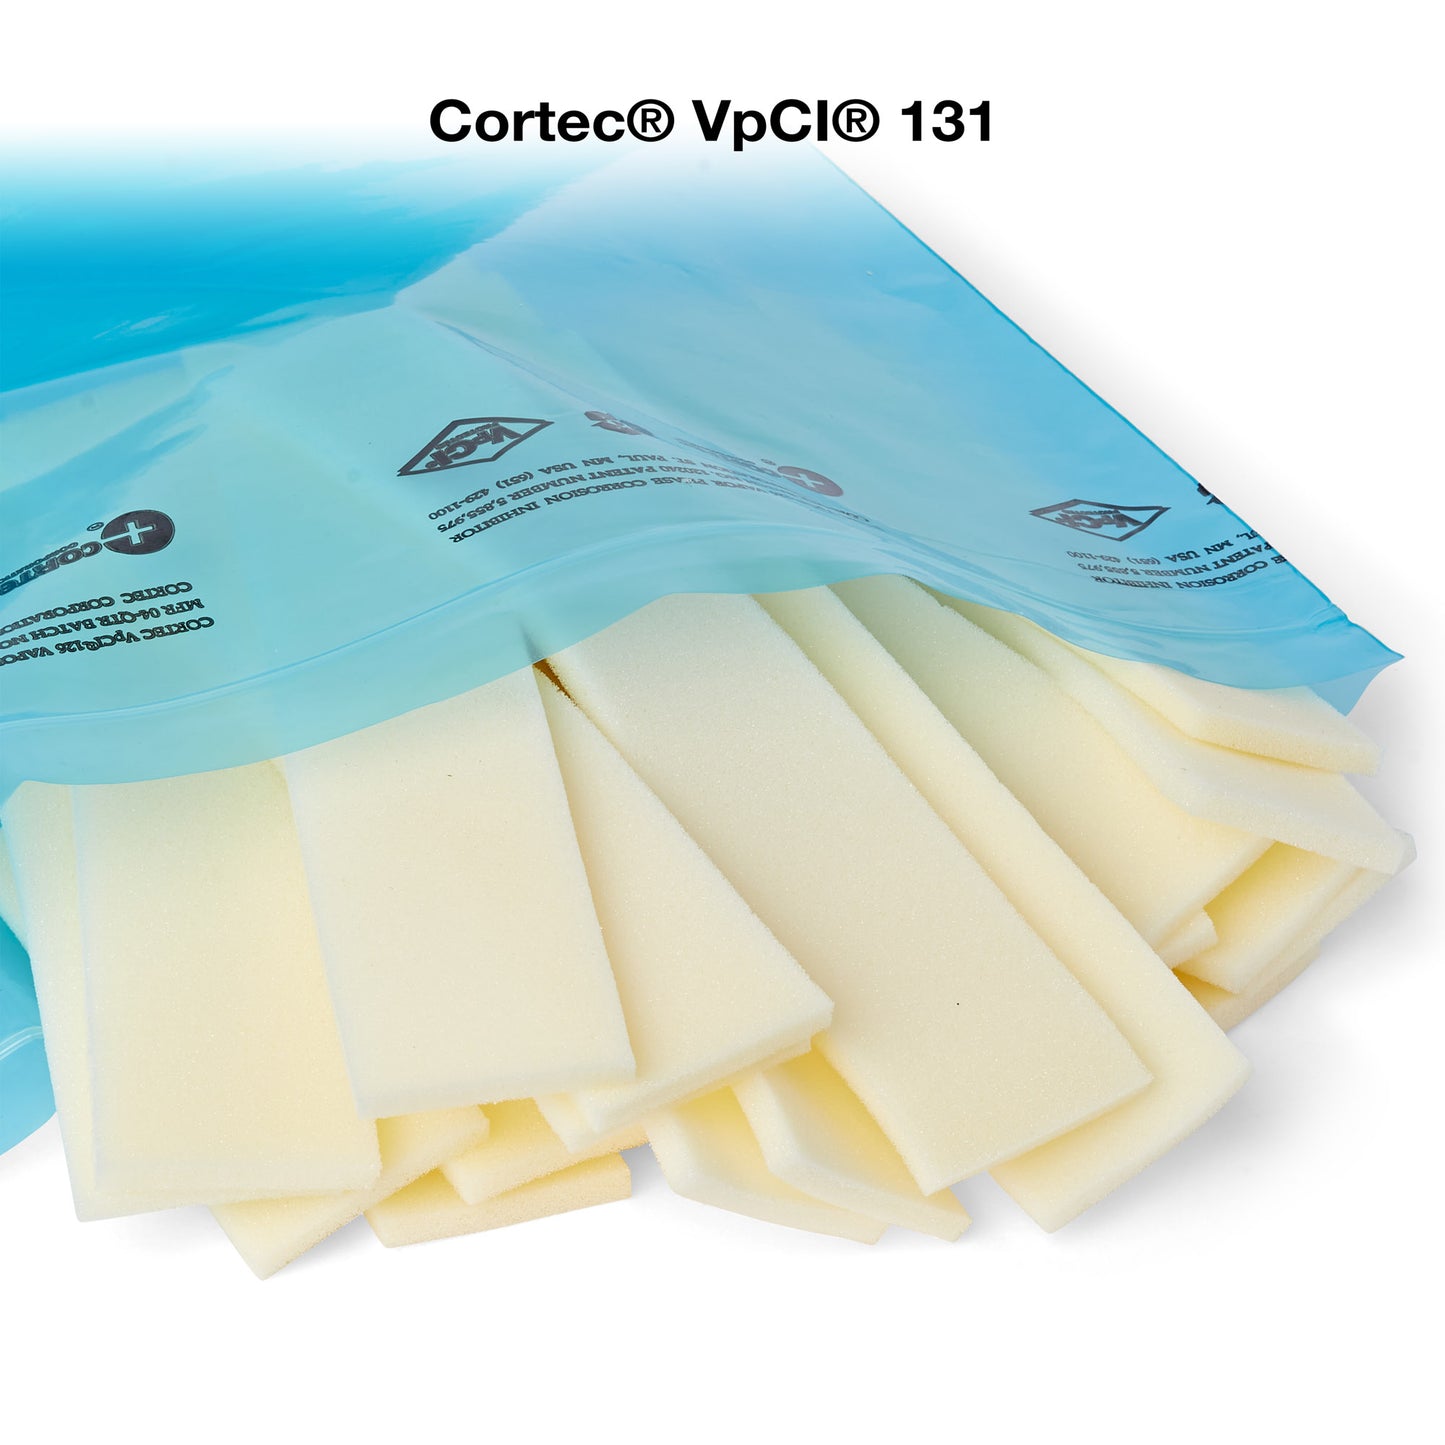 Cortec VpCI® 131 AntiStatic Foam Shapes 2 x 10" (5.08 x 25 cm) Valdamarkdirect.com